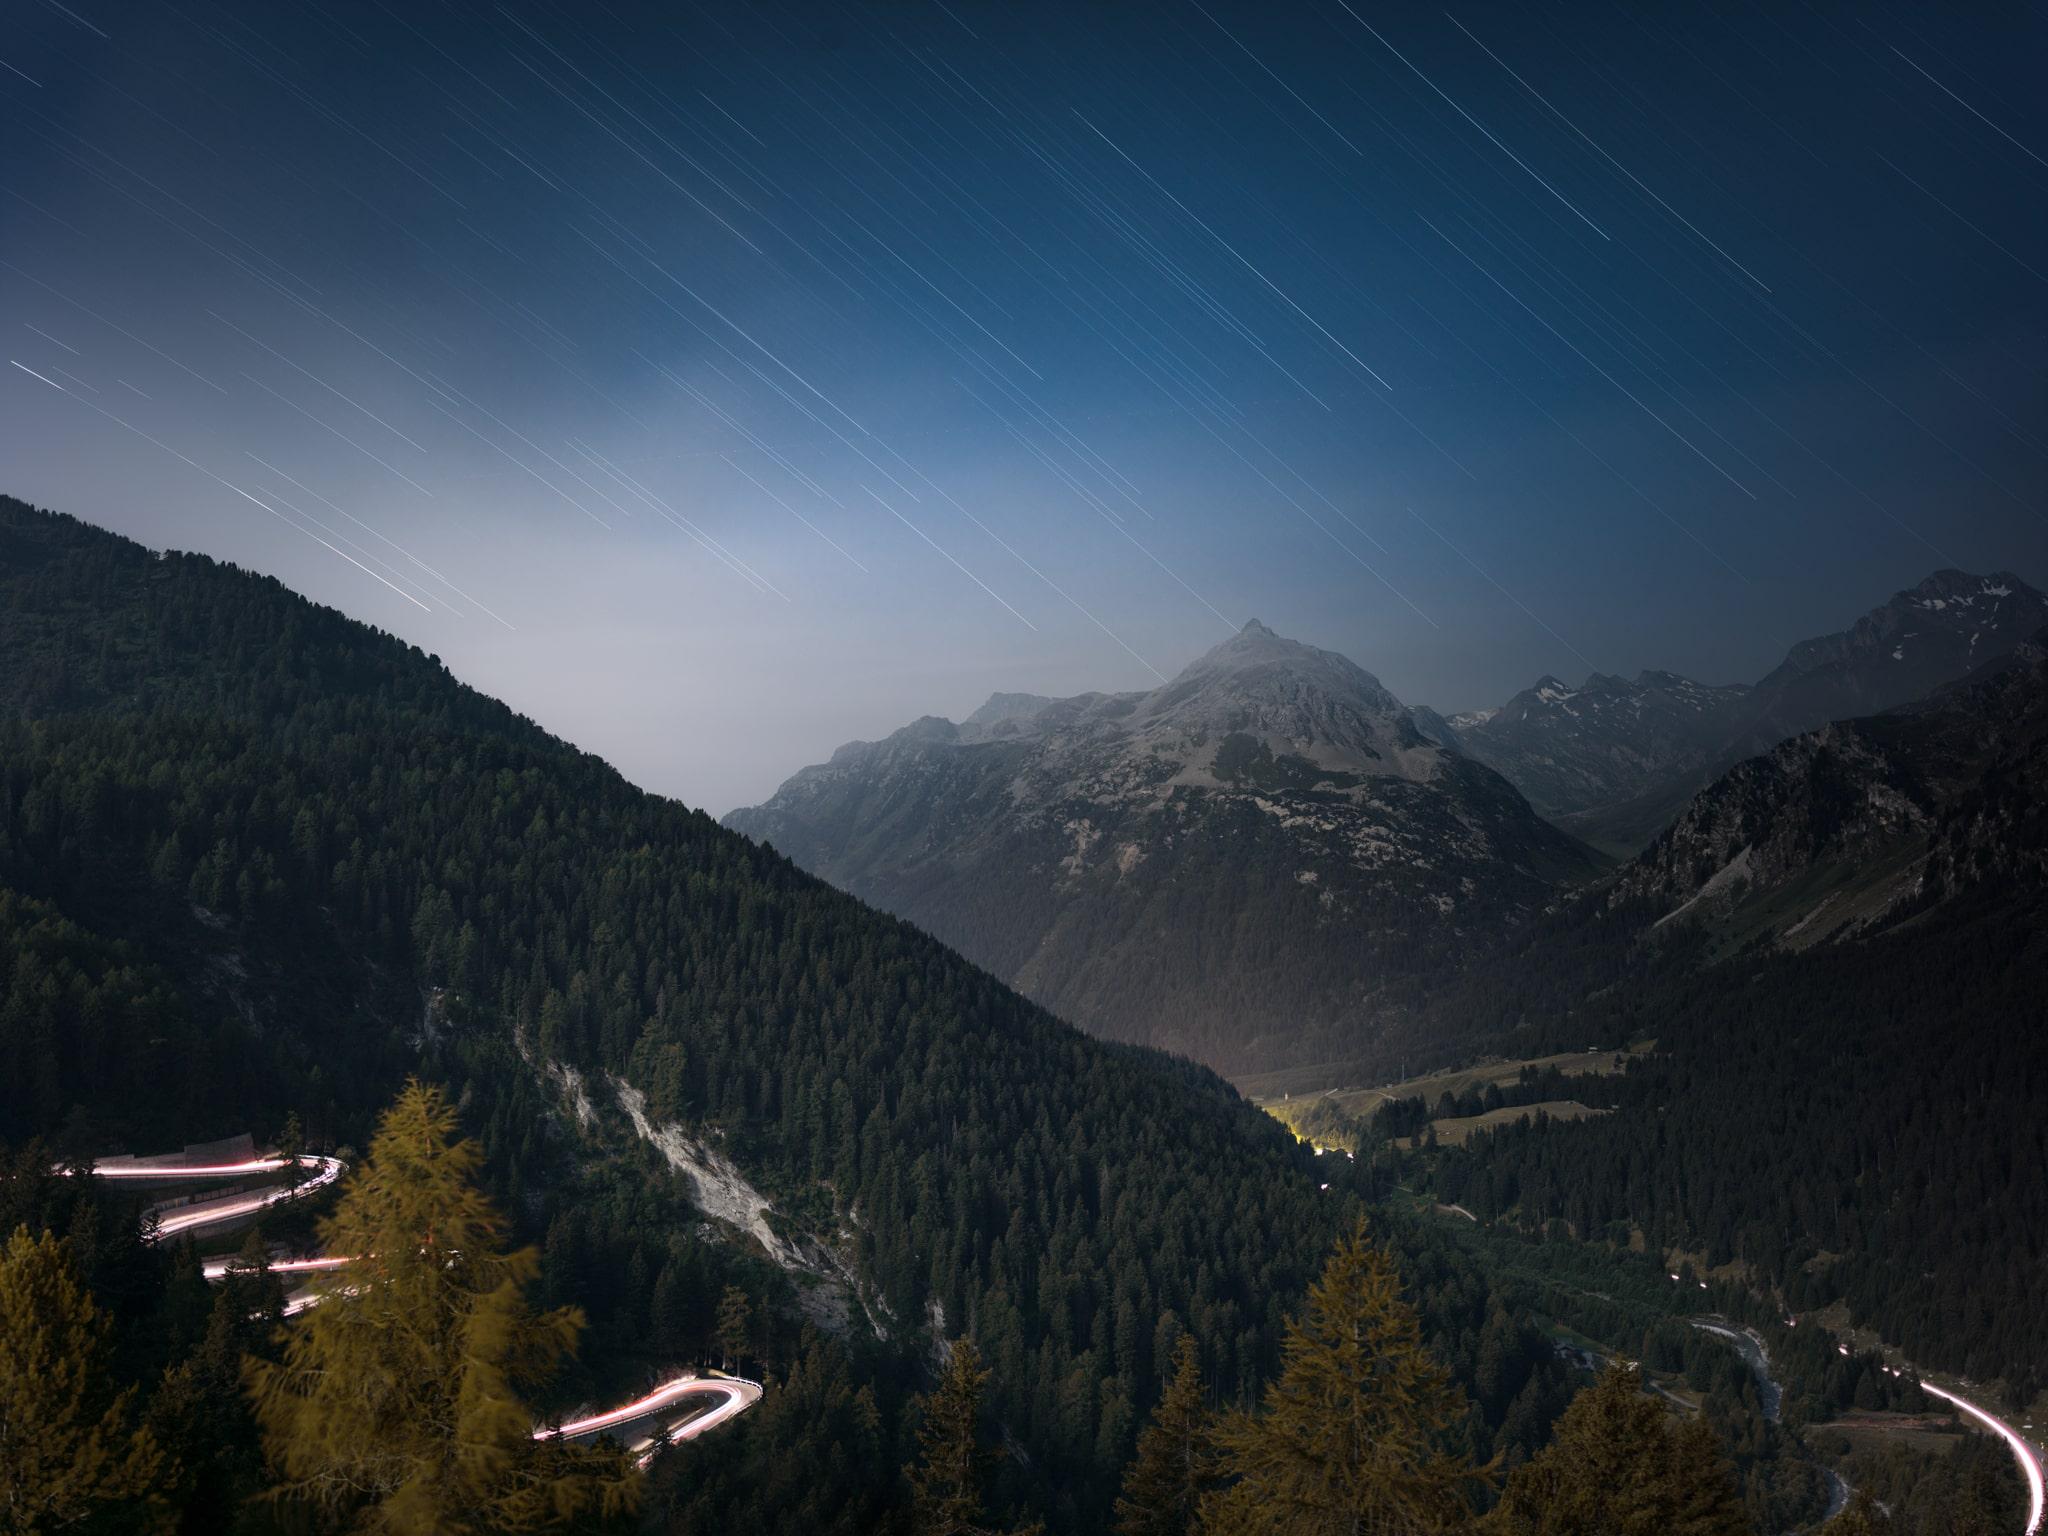 Anna Dobrovolskaya-Mints Color Photograph - Maloja Pass in Switzerland. Night photo, star trails and Swiss Alps